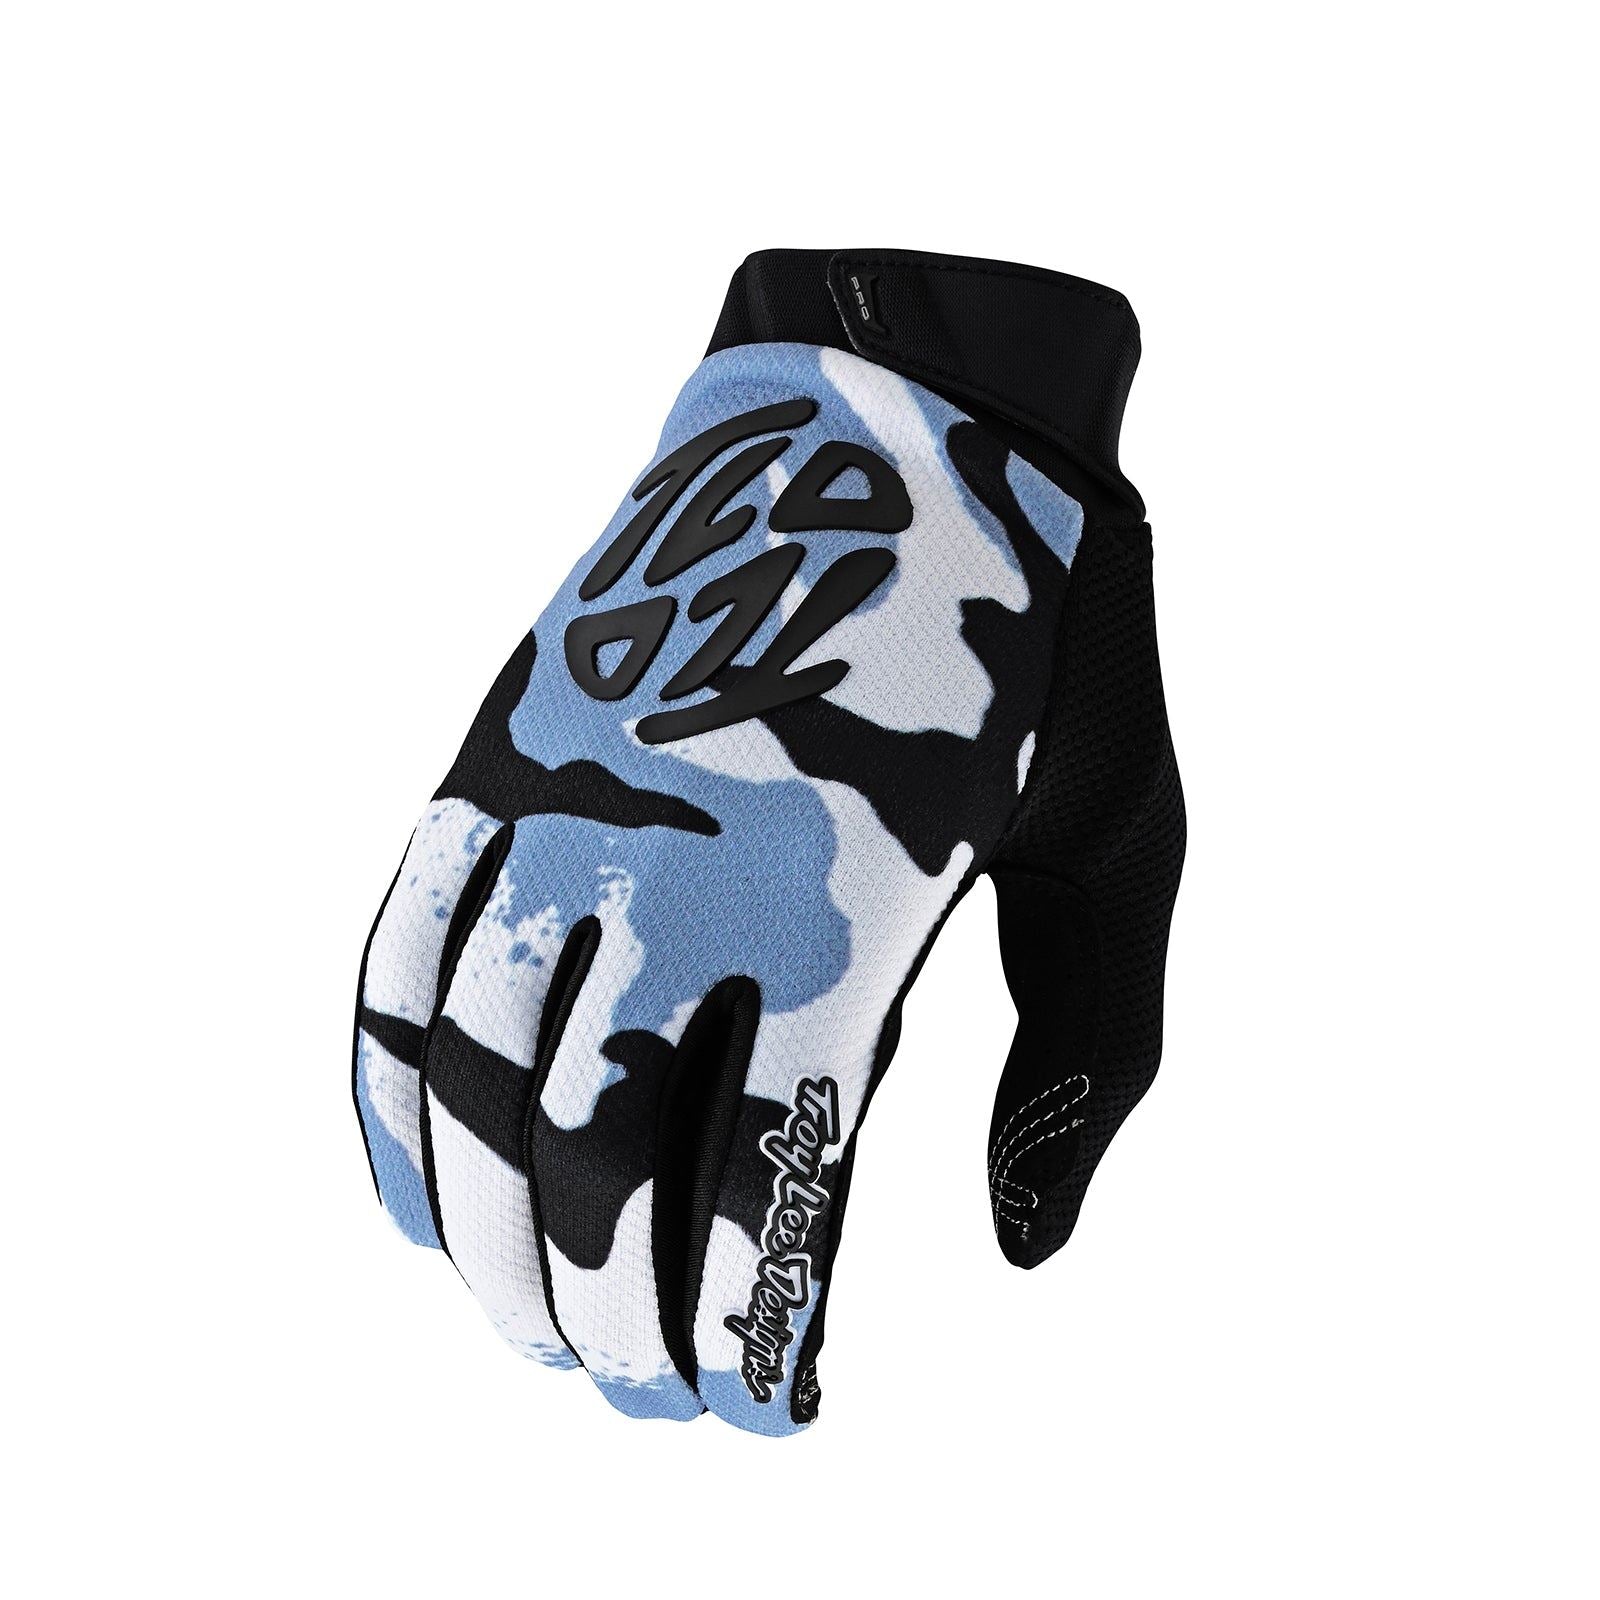 Troy Lee Designs 2025 GP Pro Boxed In Black Gloves